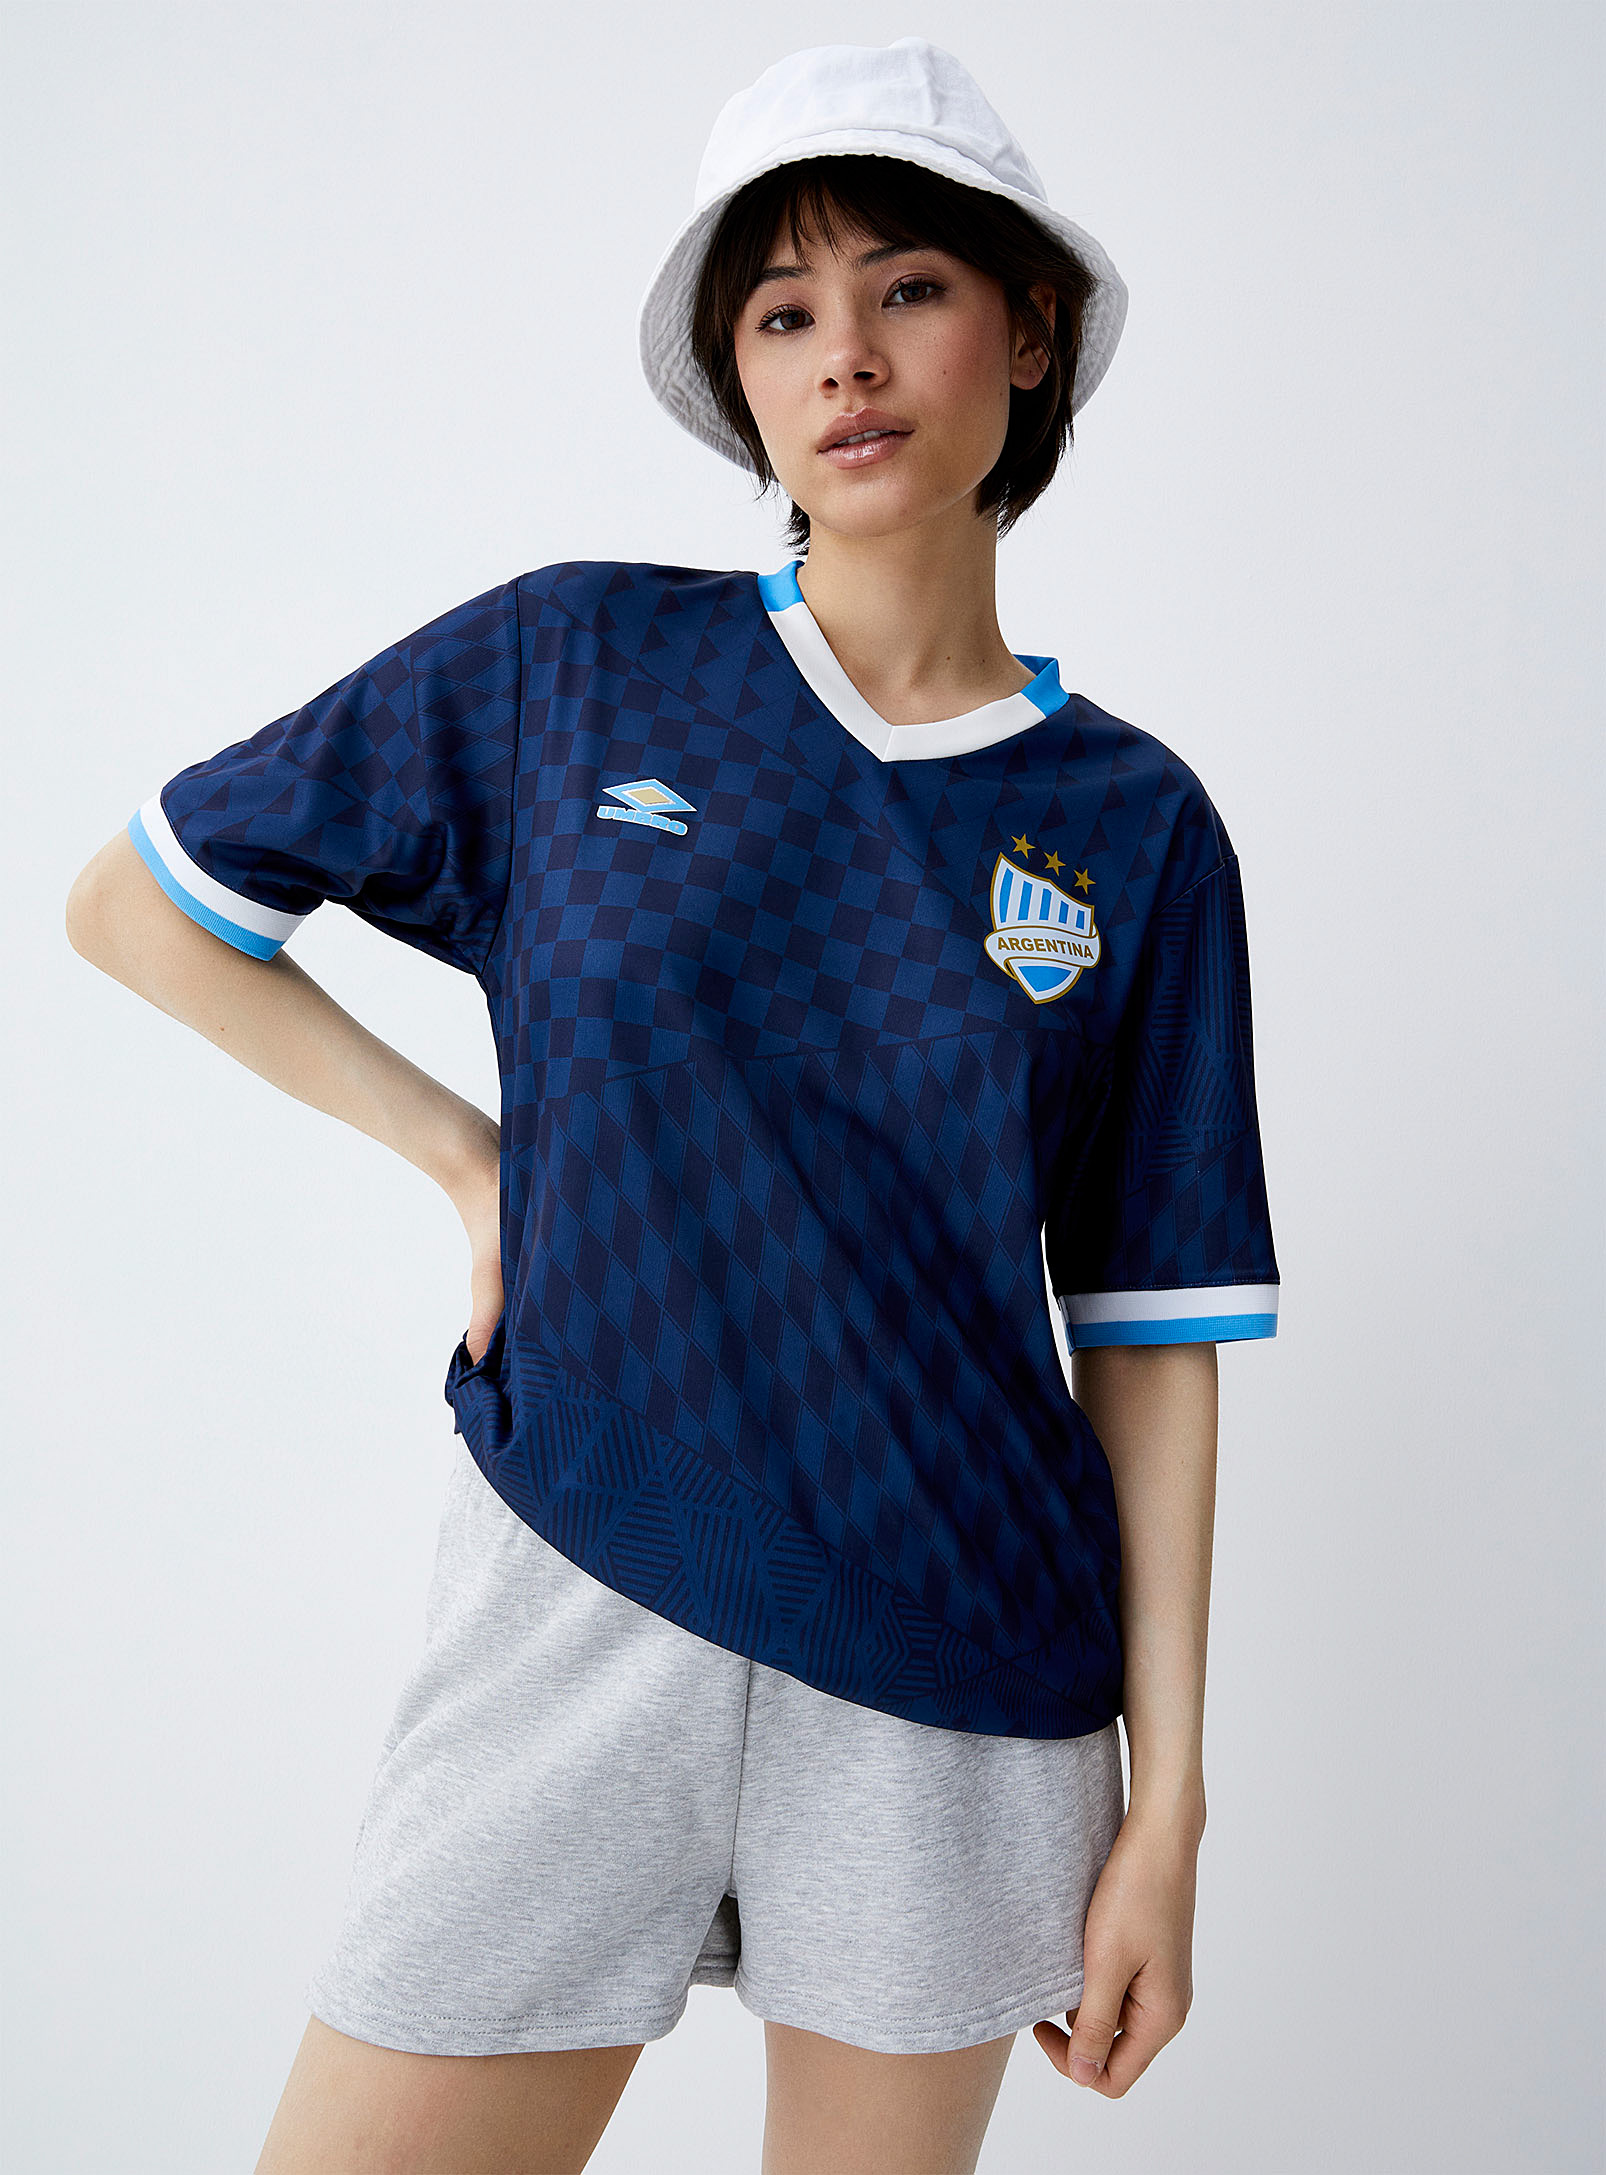 Umbro - Women's Argentina soccer Tee Shirt